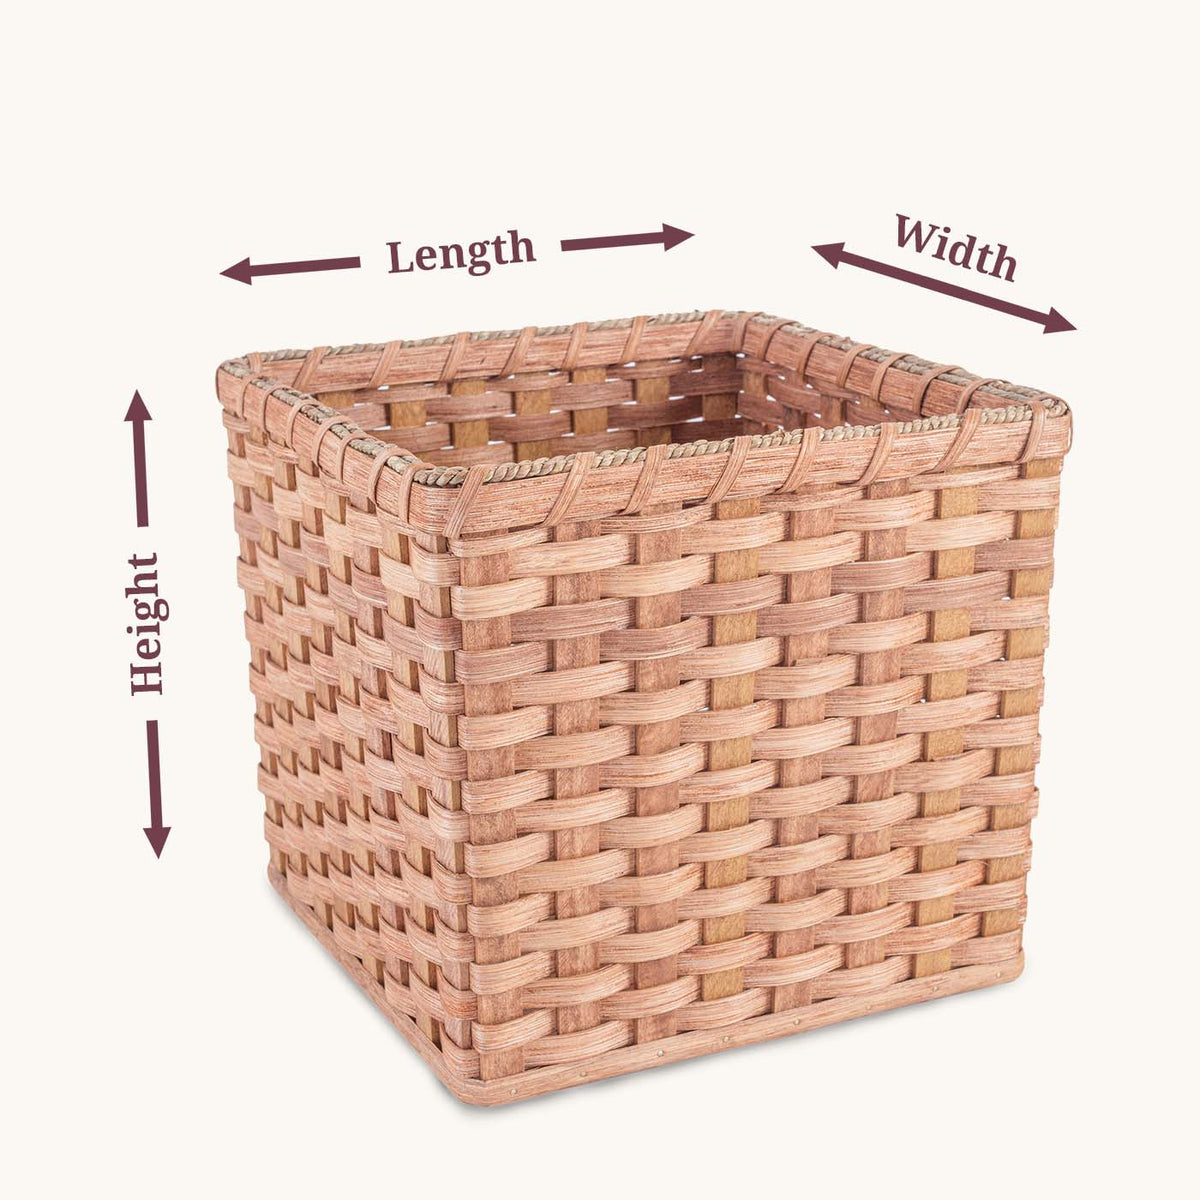 Rectangular Storage Basket for Living Room, Small Kitchen Storage